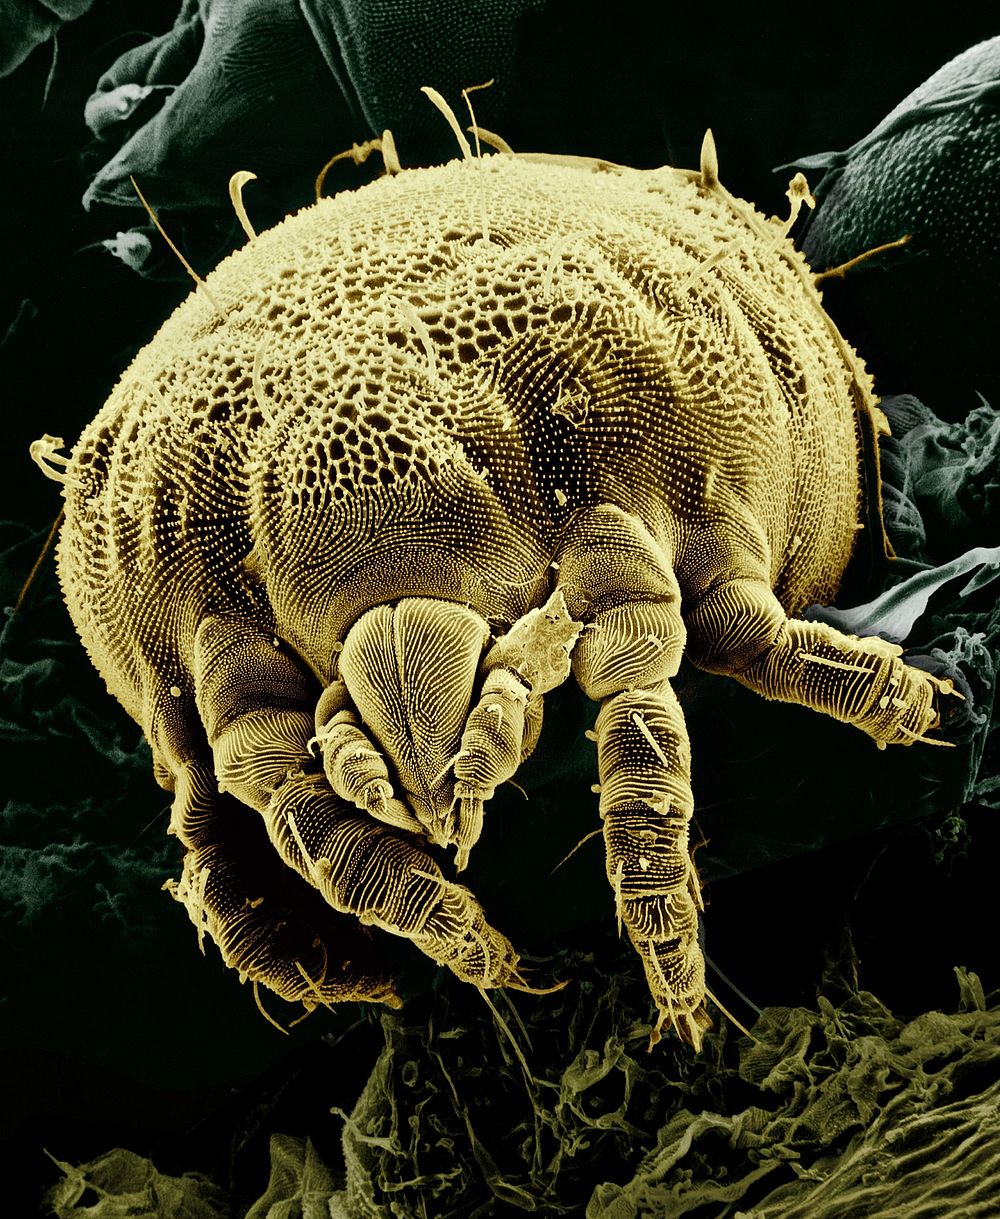 Free bee closeup image, public domain animal CC0 photo.